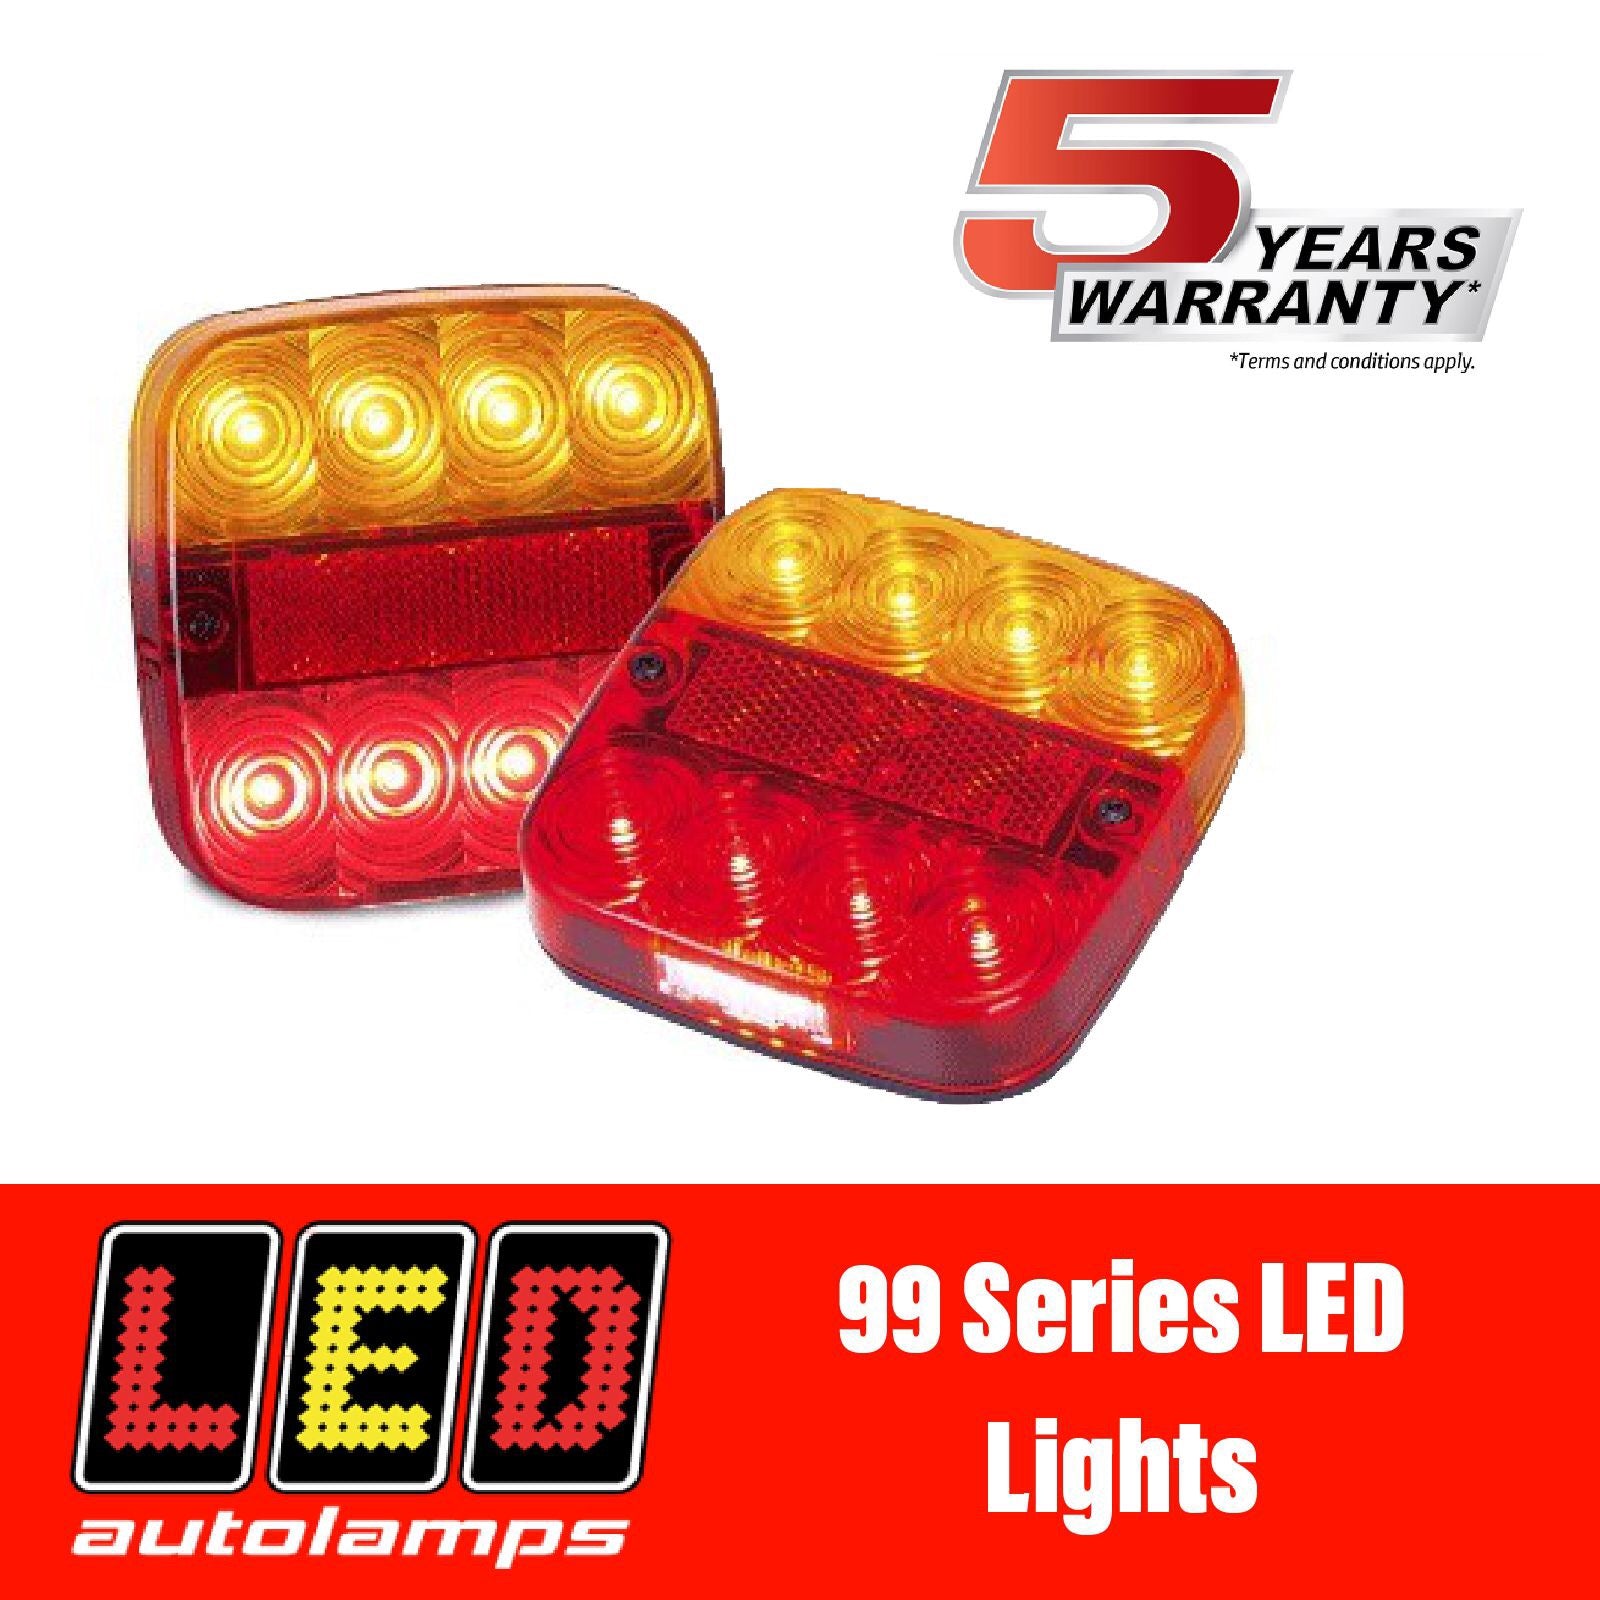 LED AUTOLAMPS 99 Series LED Lights